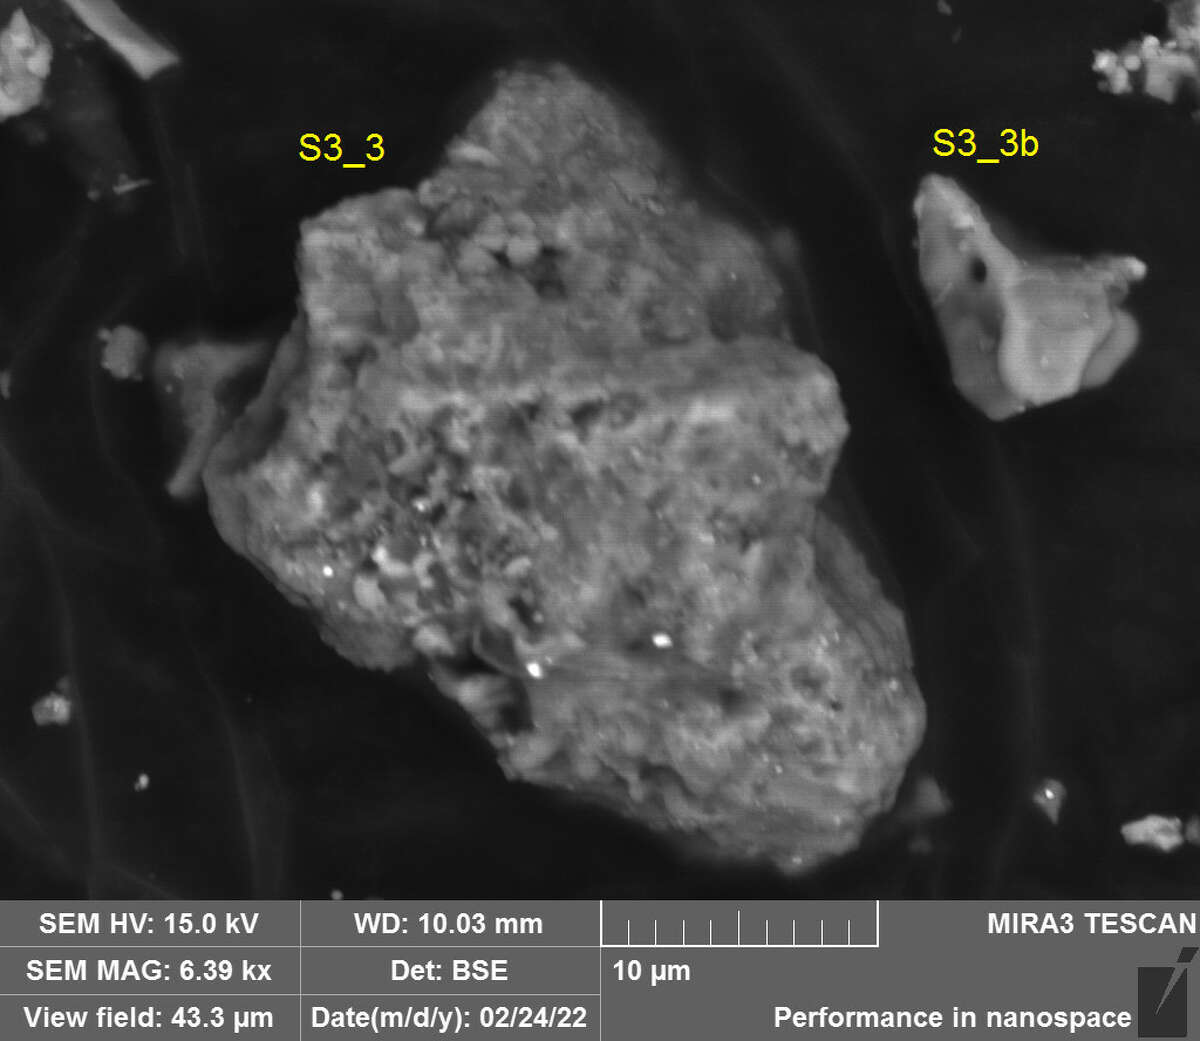 The lunar dust sample under a microscope.